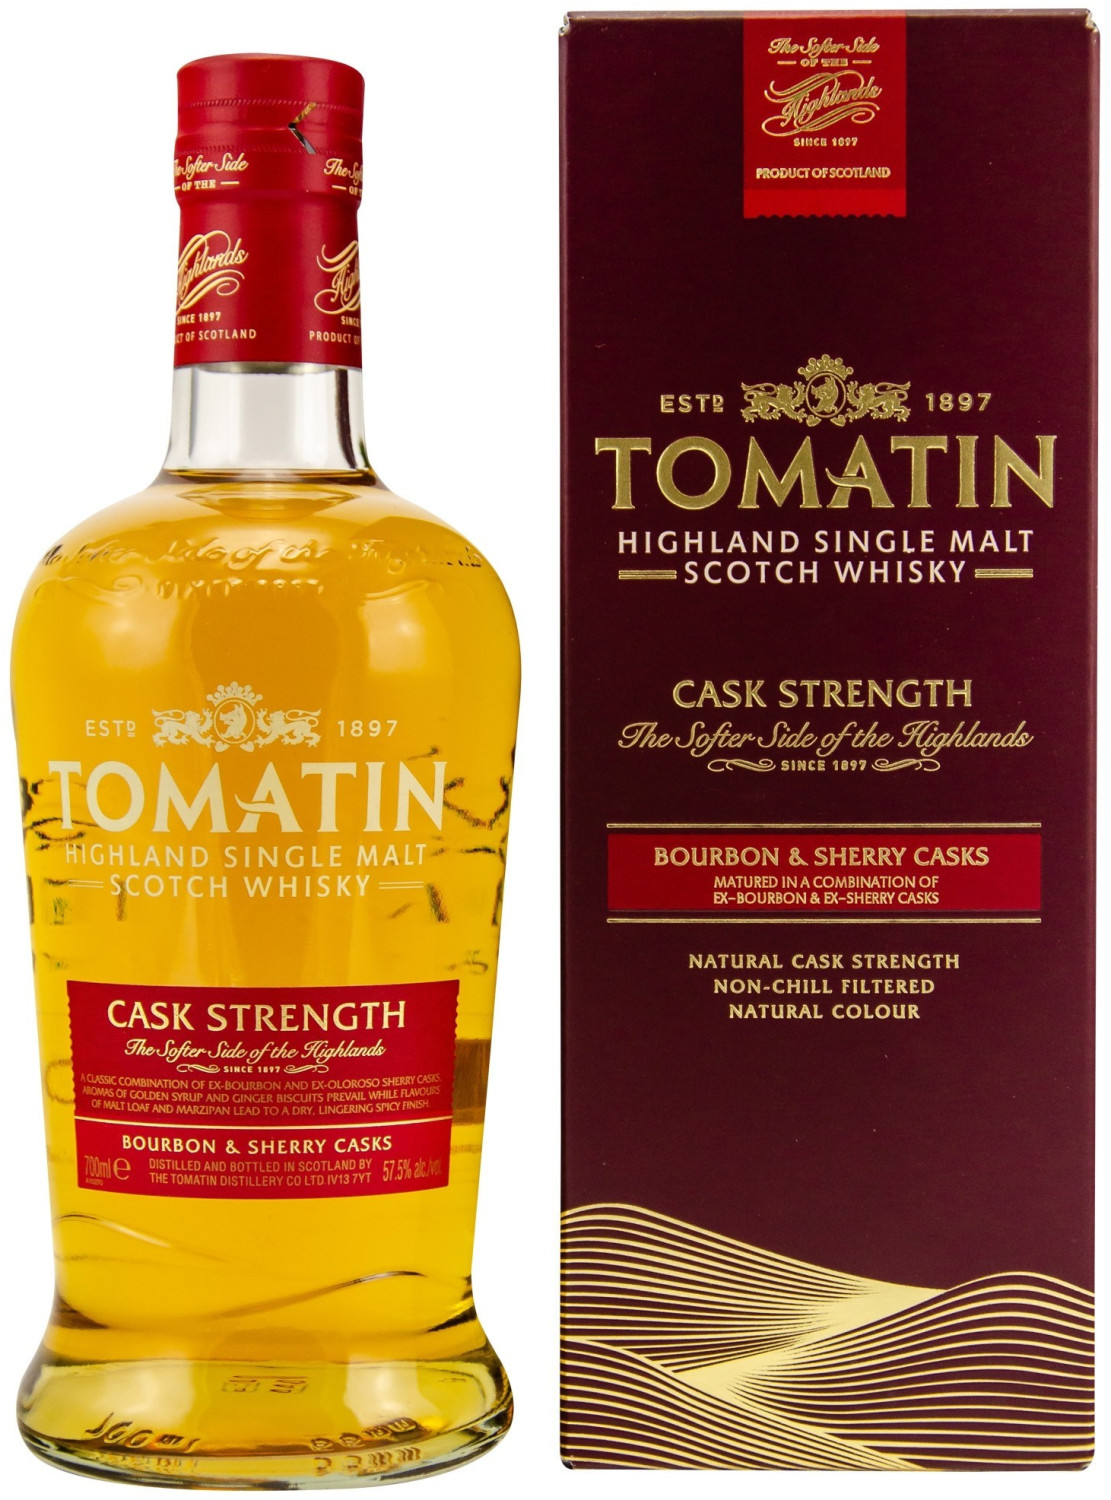 Tomatin Cask Preisvergleich 41,95 0,7l bei € 57,5% ab | Whisky Strength